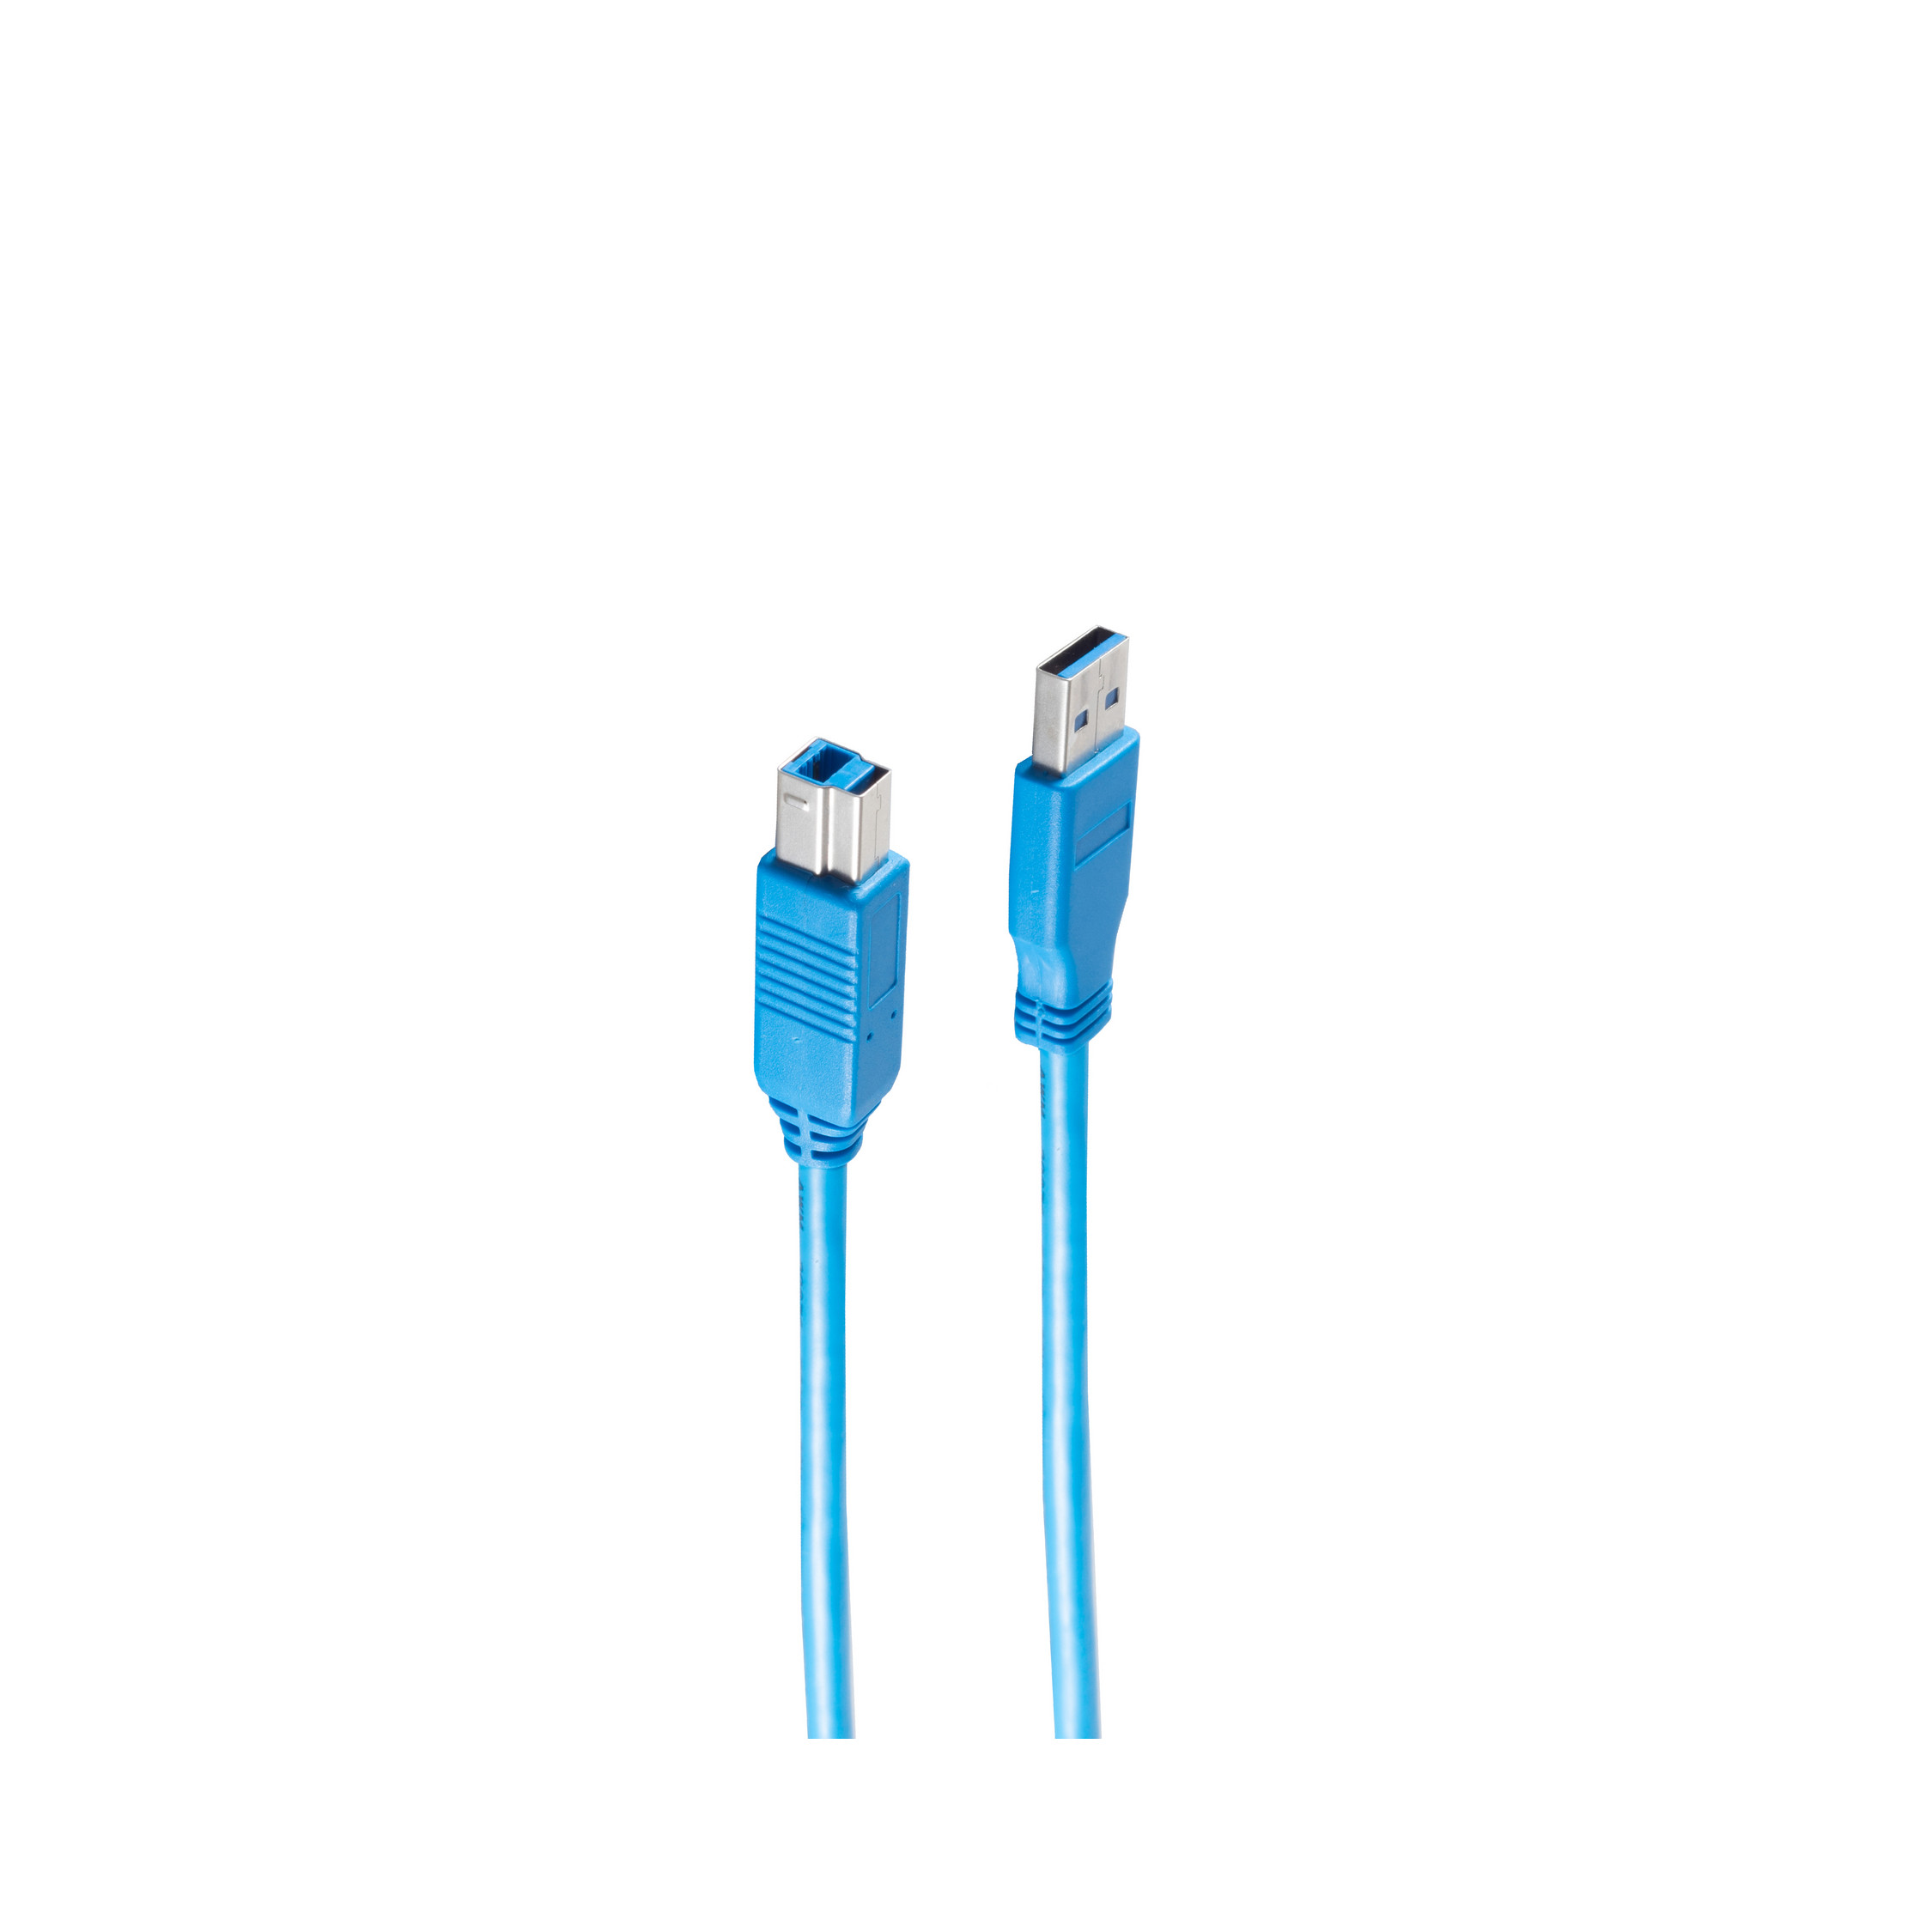 3m Kabel USB A Stecker USB Kabel blau SHIVERPEAKS B USB / Stecker 3.0